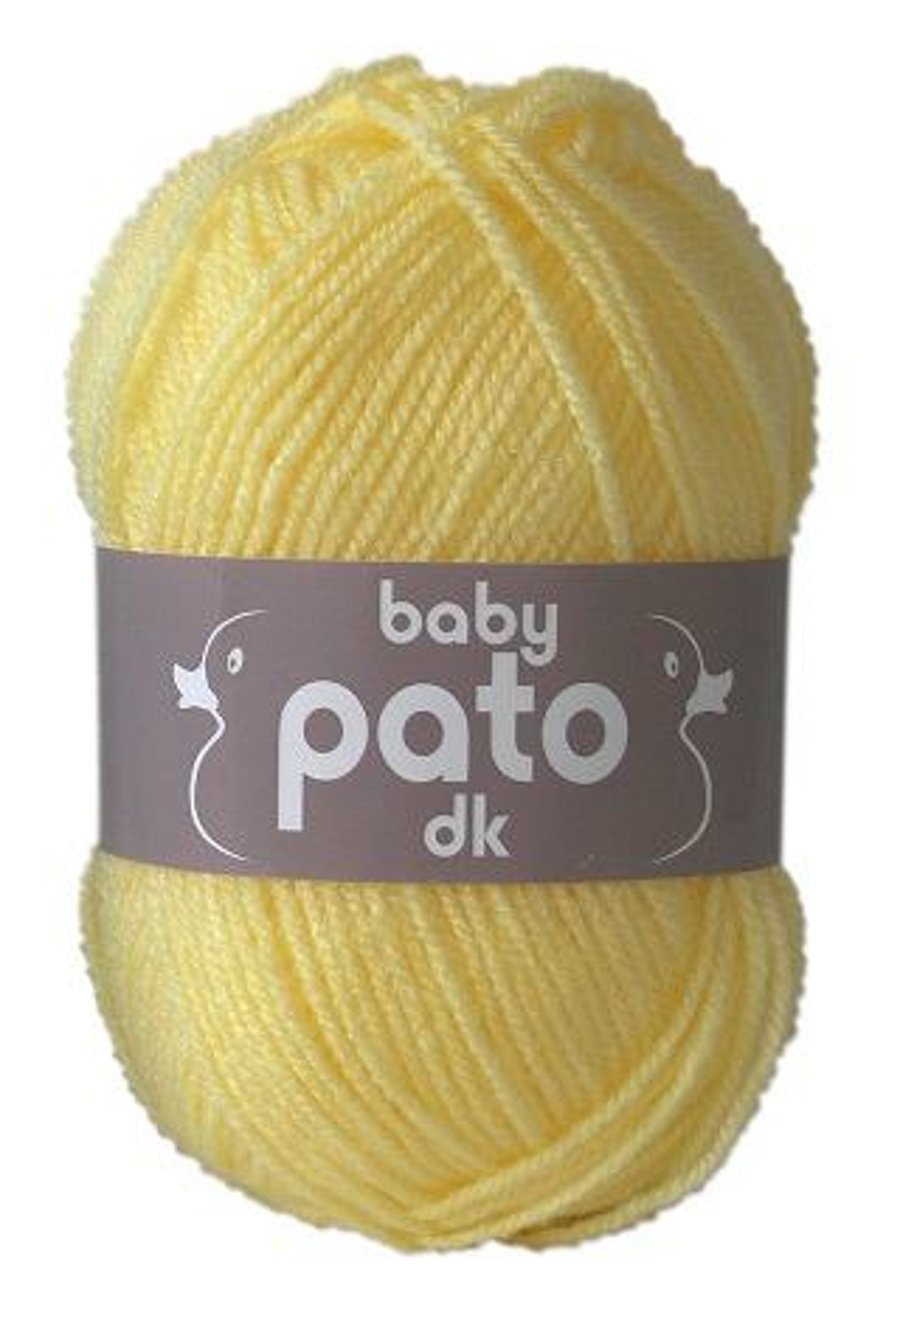 Baby Pato  acrylic dk - 50g balls